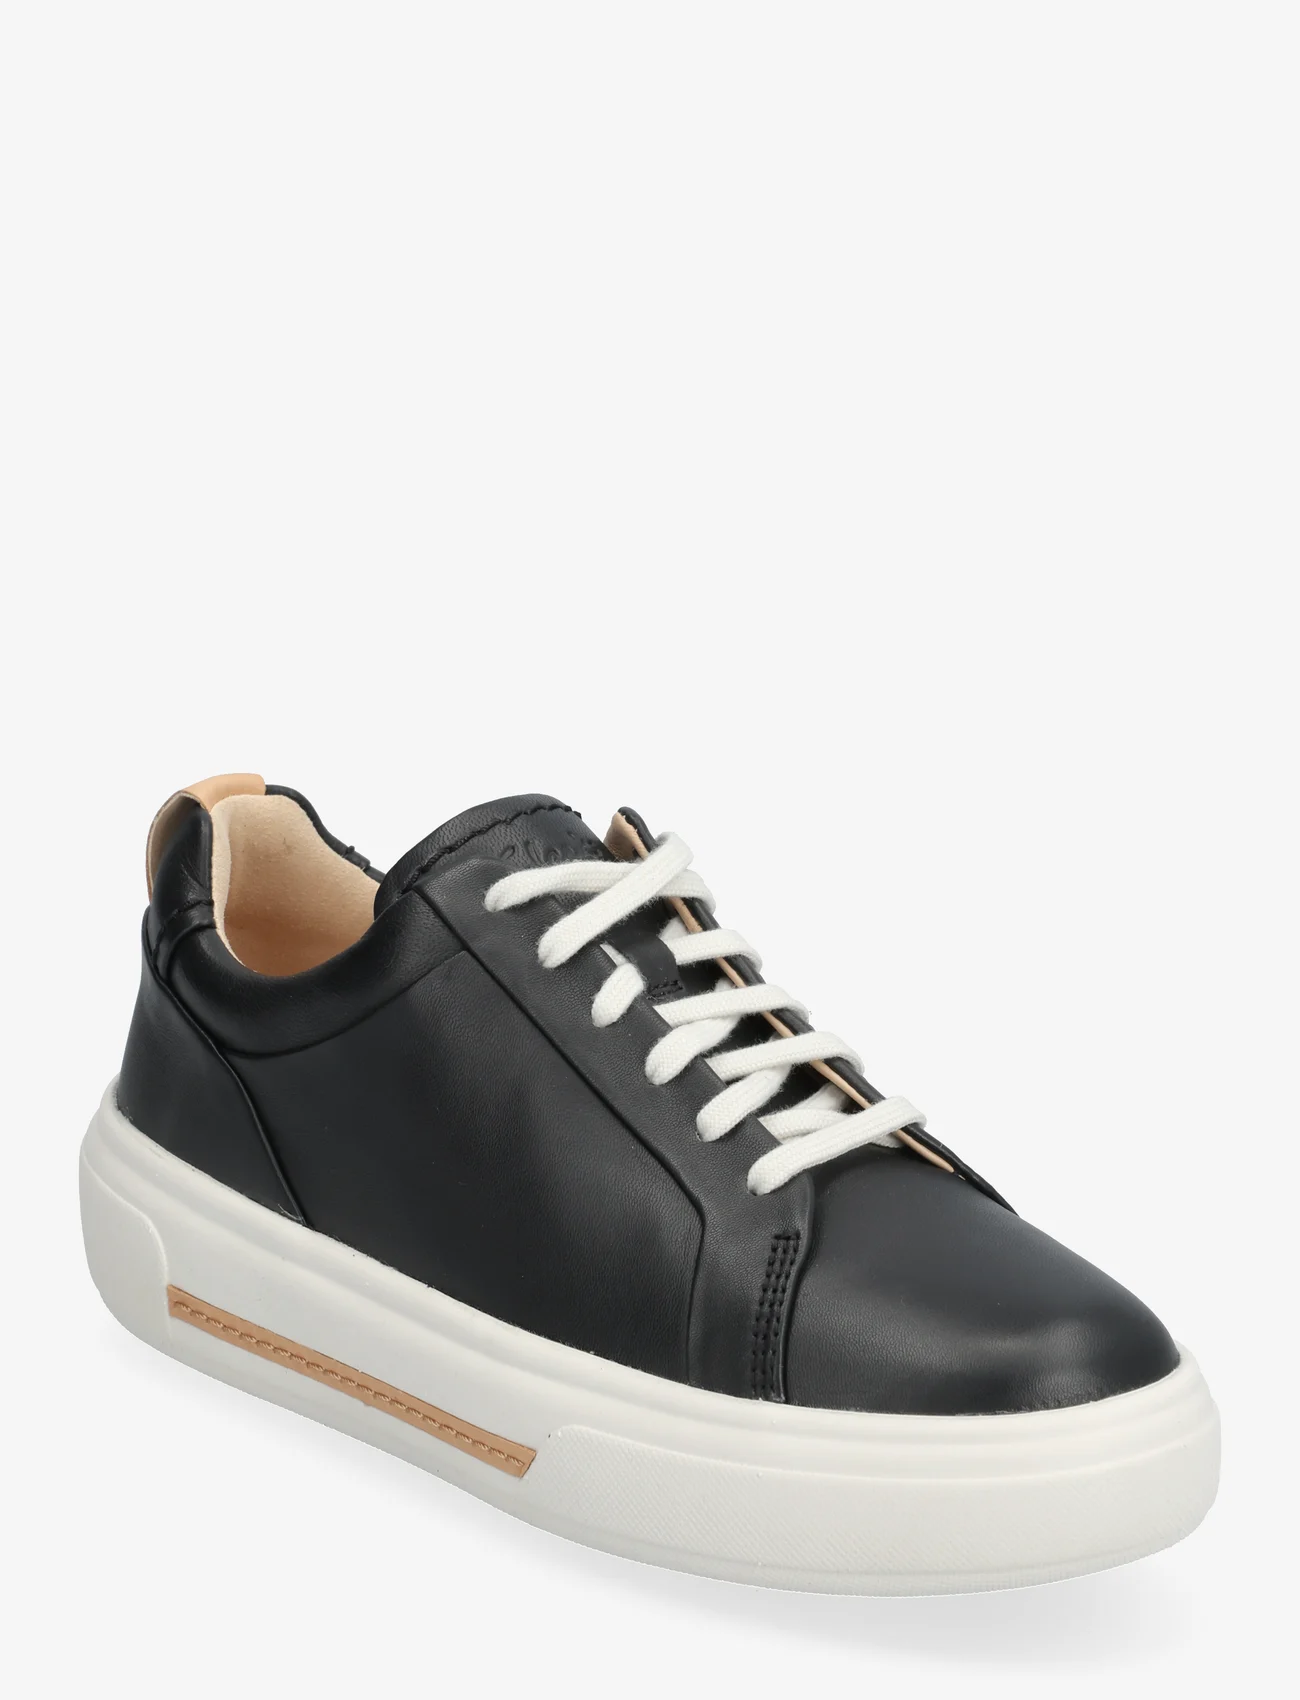 Clarks - Hollyhock Walk D - low top sneakers - 1216 black leather - 0